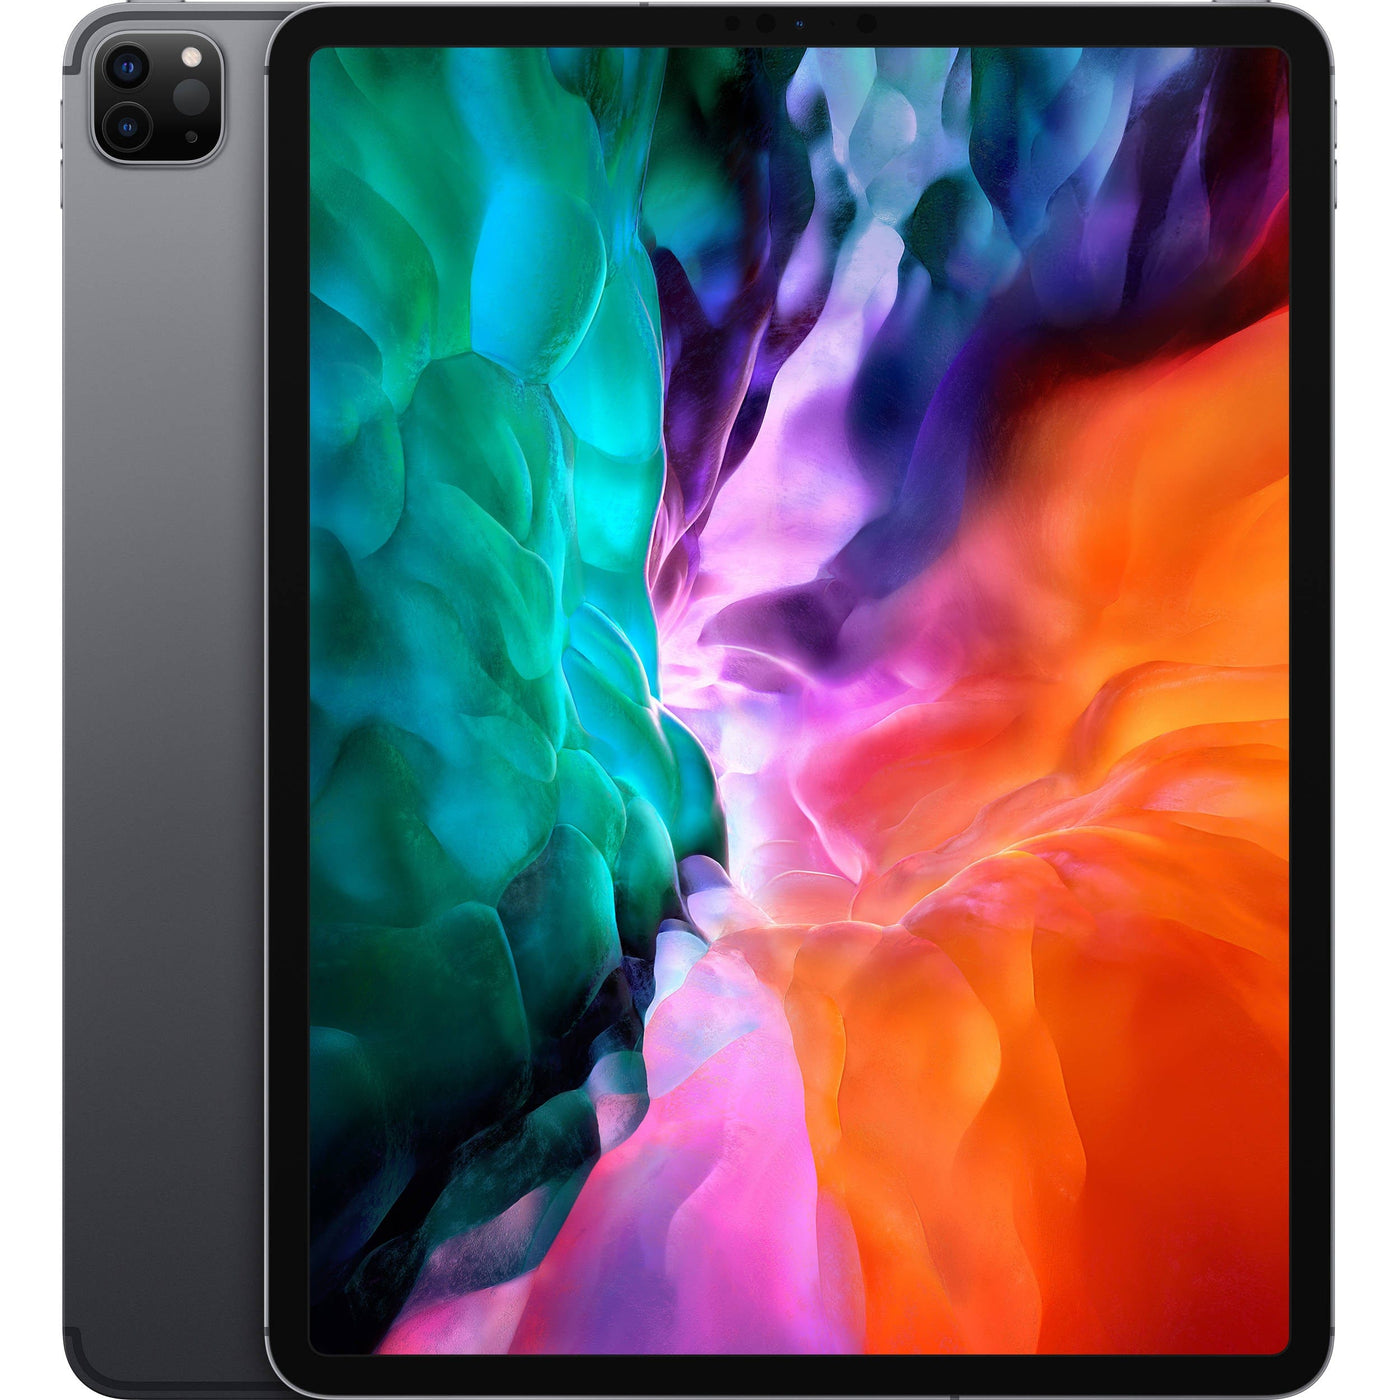 Apple iPad Space Grey / 128GB iPad Pro 12.9-inch (4th Generation, Wi-Fi + Cellular) - Excellent